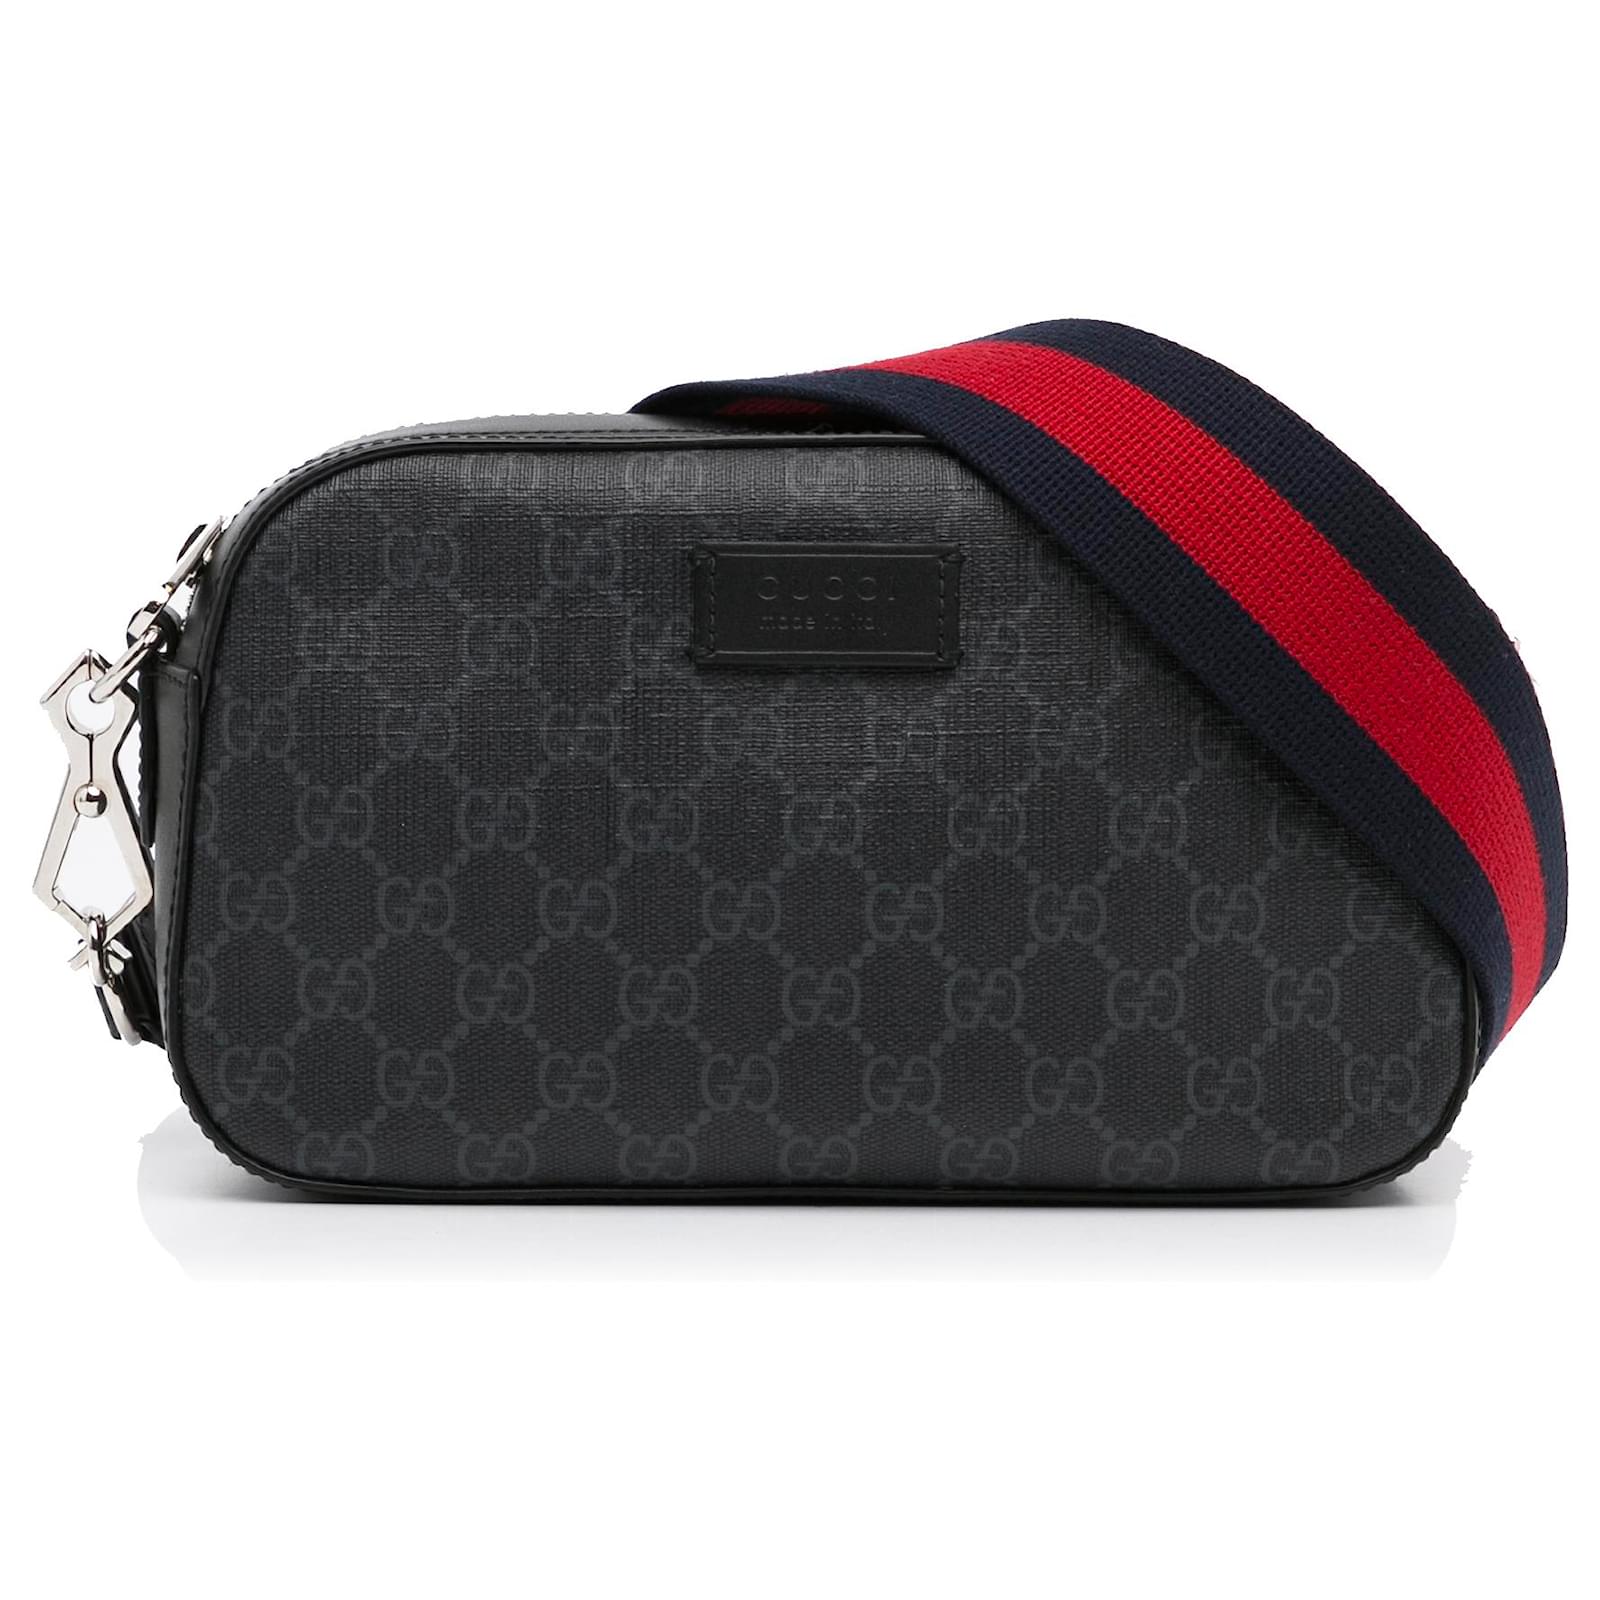 Crossbody Handbags, Gg Crossbody Bag, Gg Shoulder Bag, Gg Fashion Bag